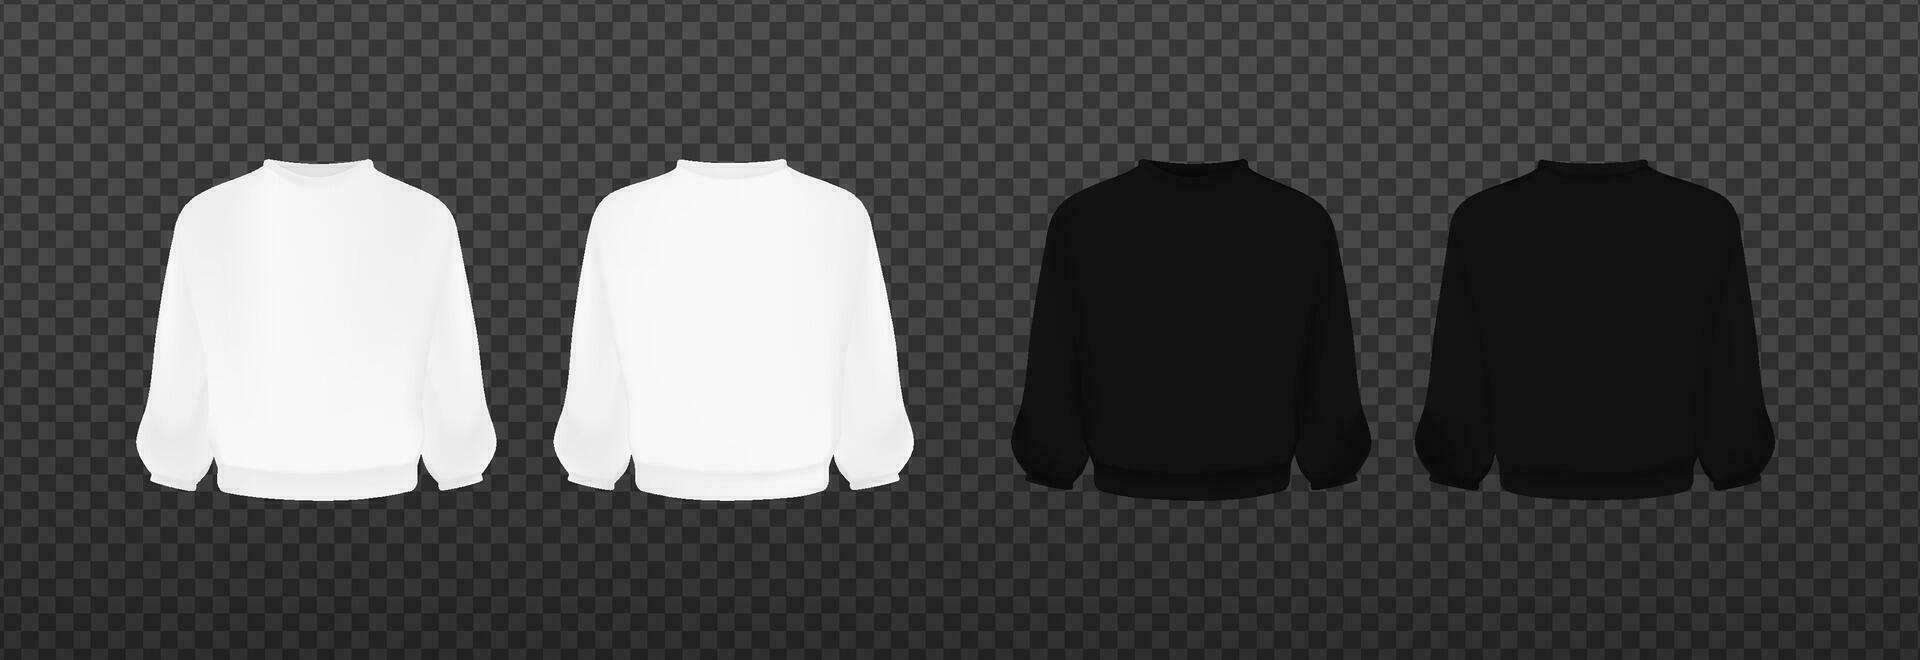 White and black long sleeve template.  Sweatshirt mockup vector